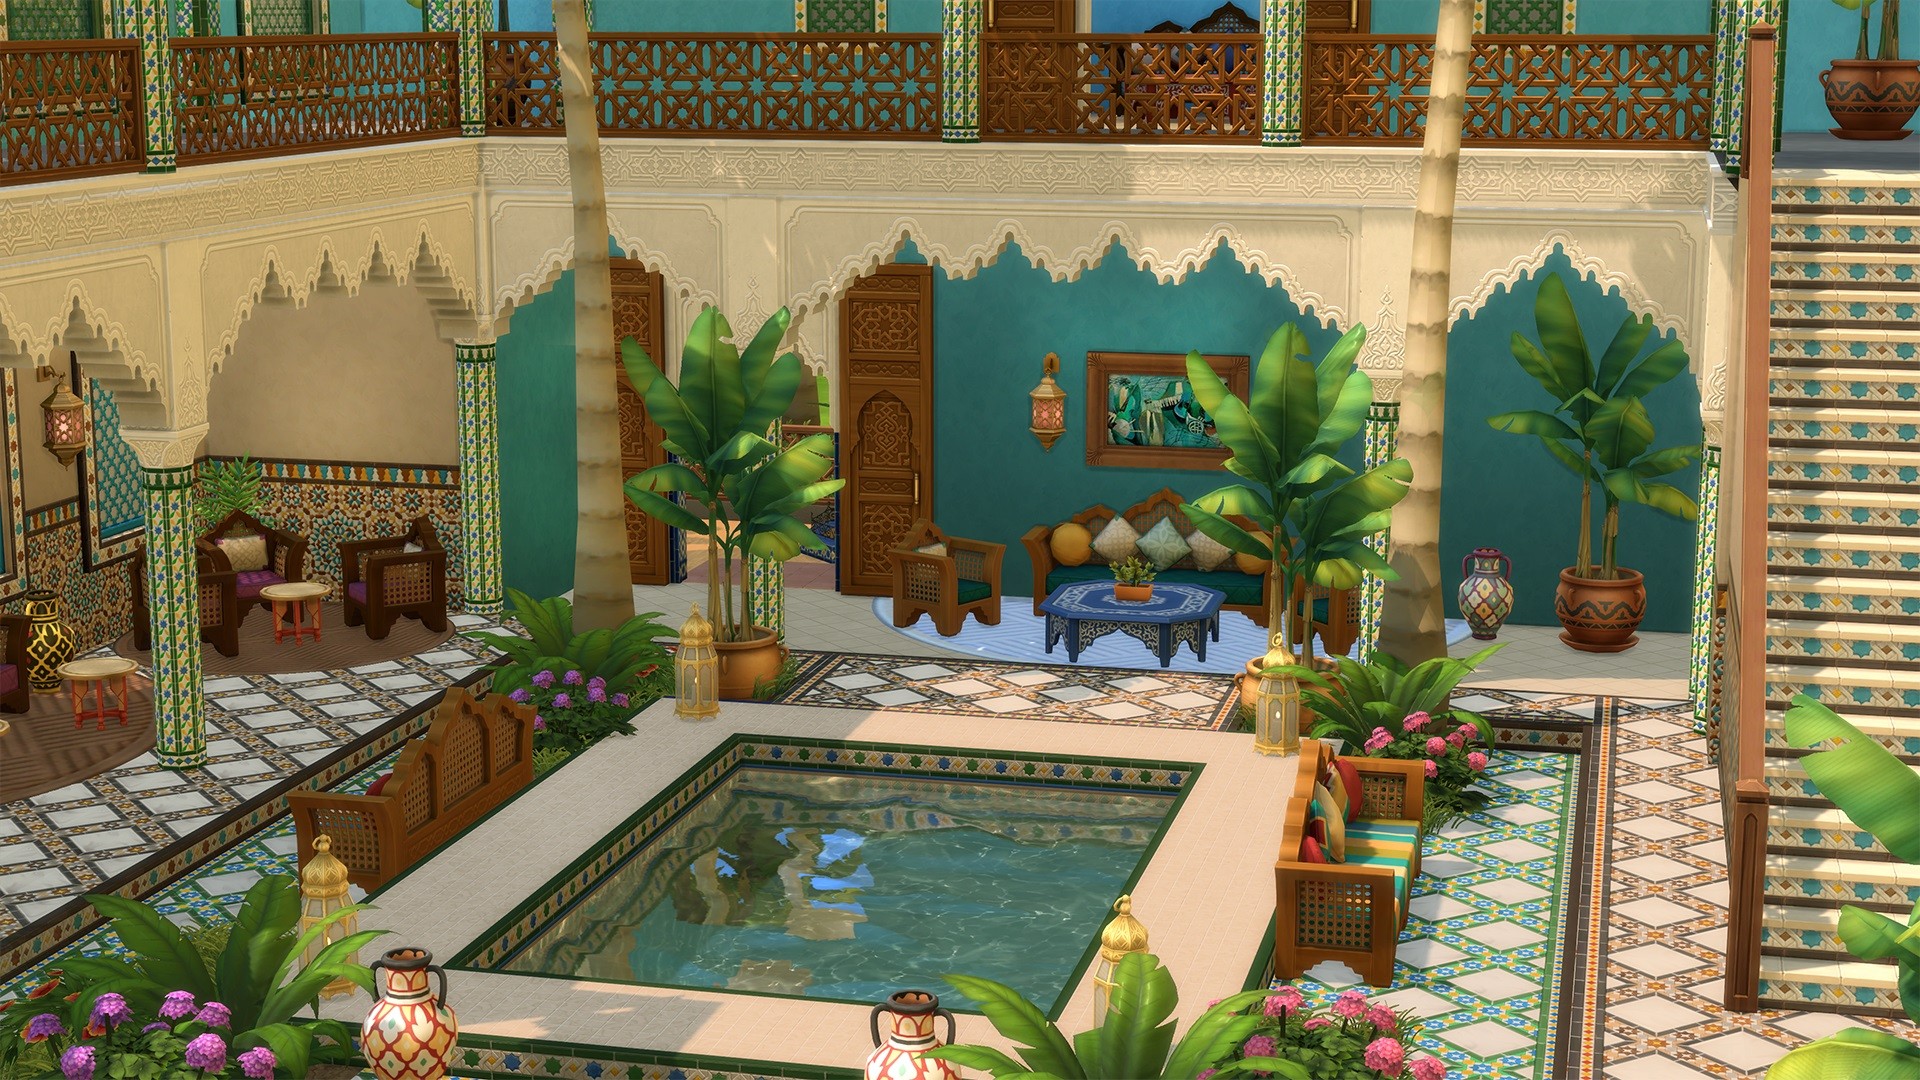 [$ 5.28] The Sims 4 - Courtyard Oasis Kit DLC Origin CD Key